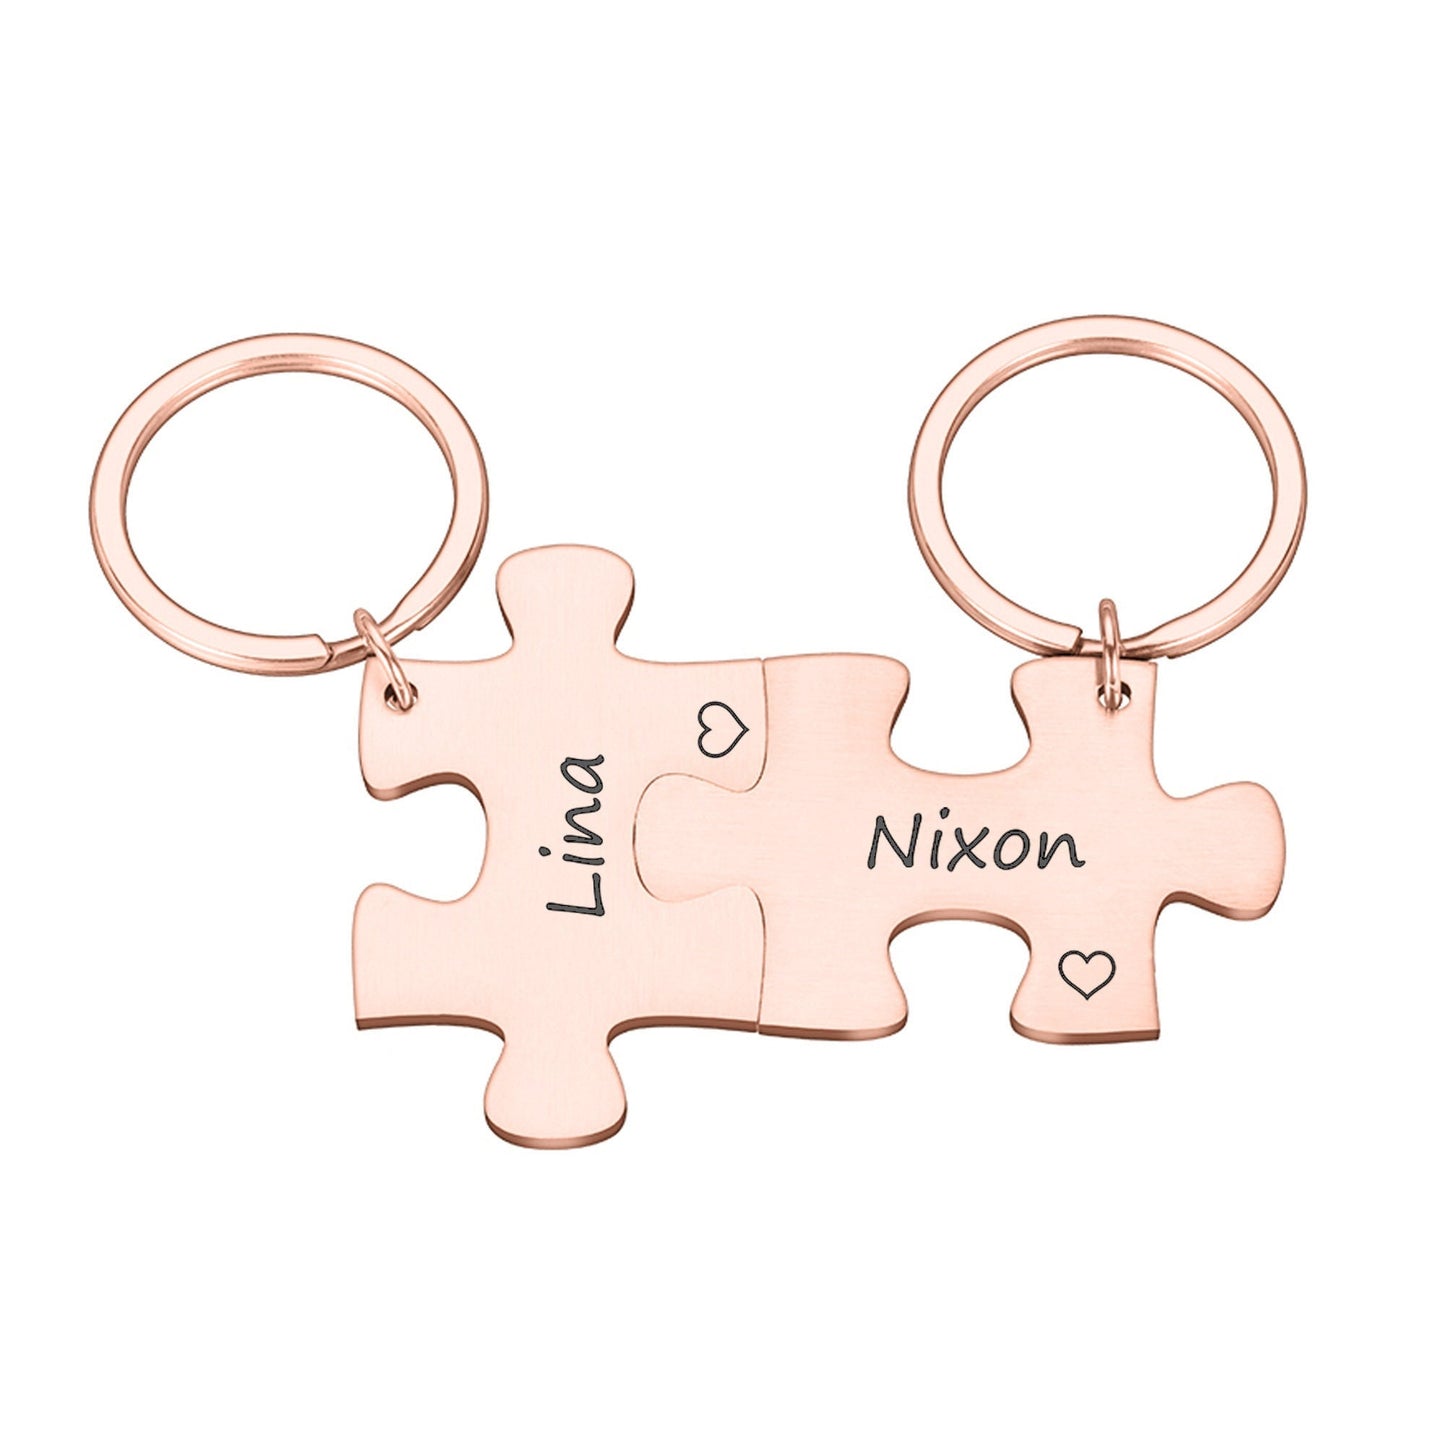 2 x personalised interlocking jigsaw puzzle keyrings gift set | custom initials date | wedding anniversary valentines family gift keychains Heart